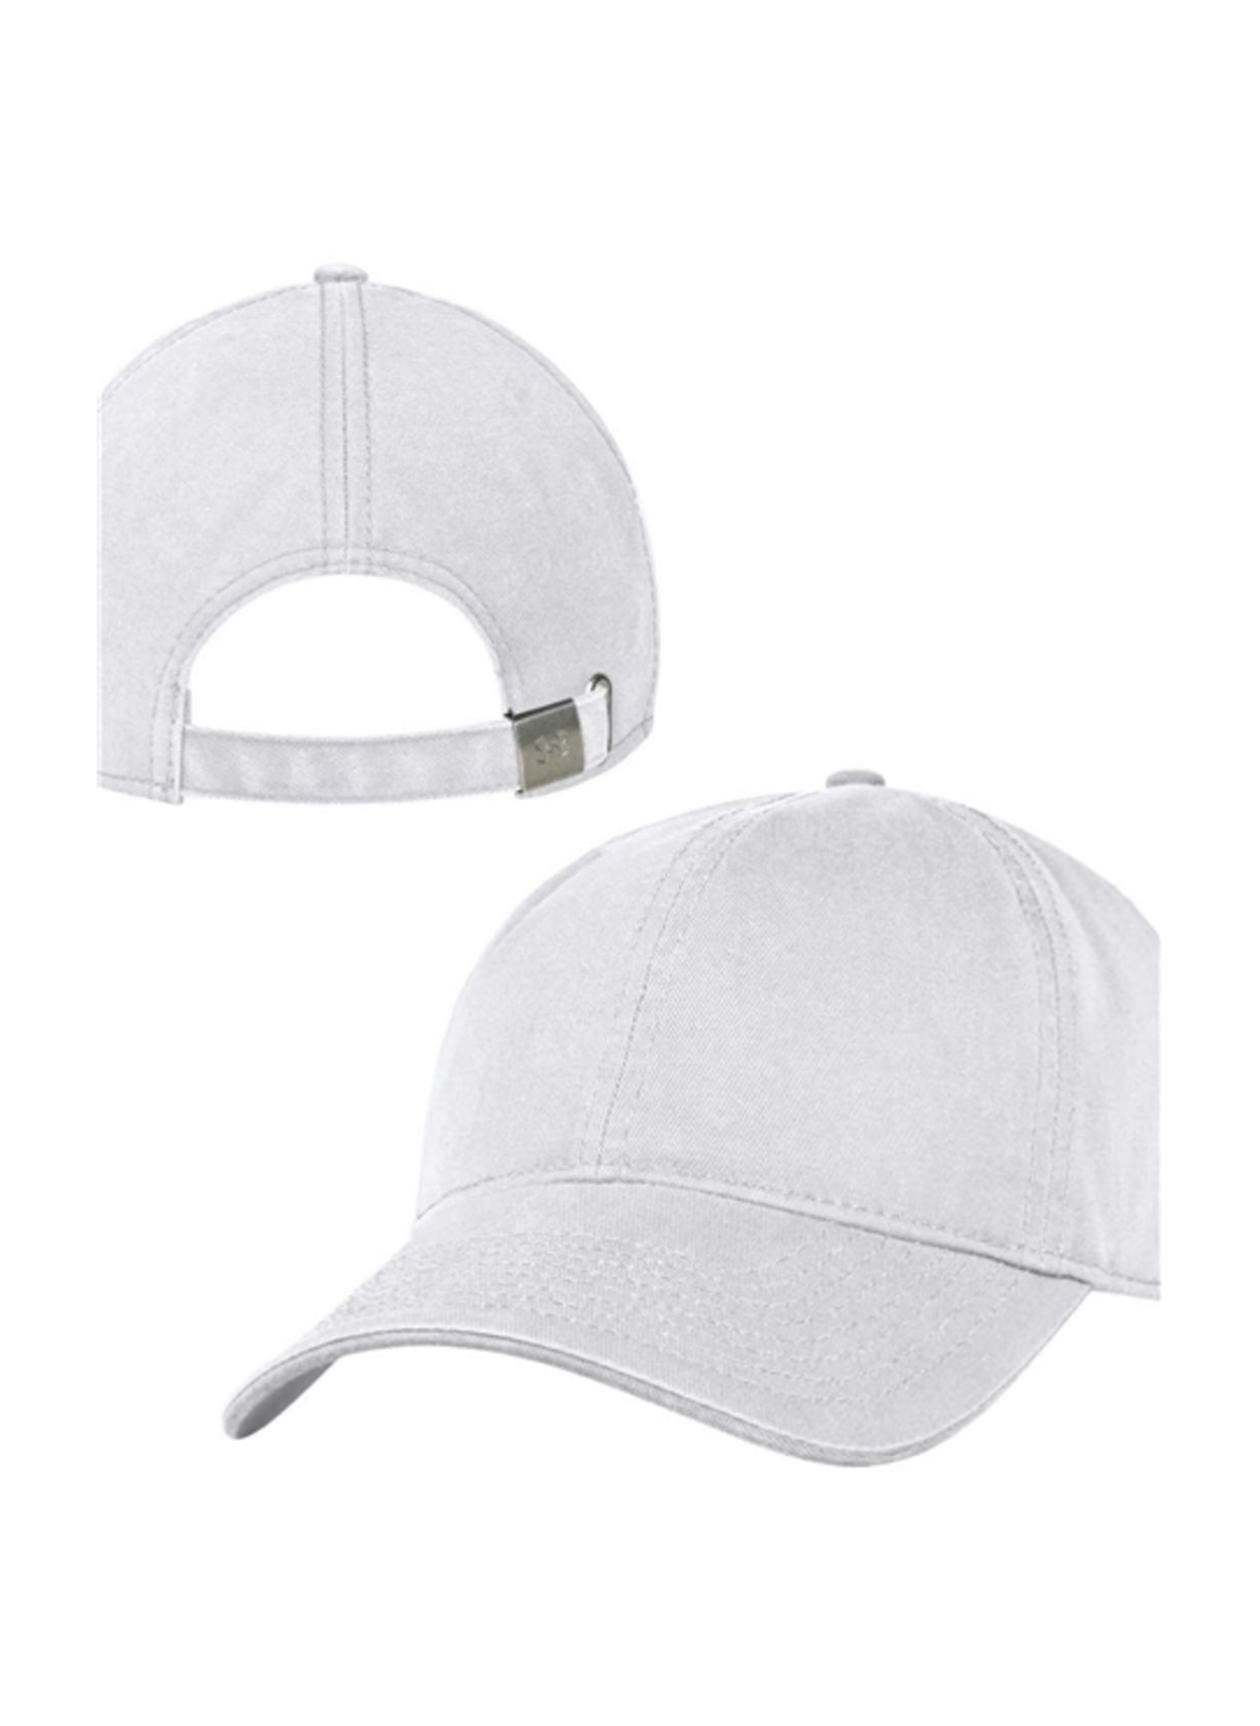 Under Armour White Women's Garment Washed Cotton Adjustable Hat